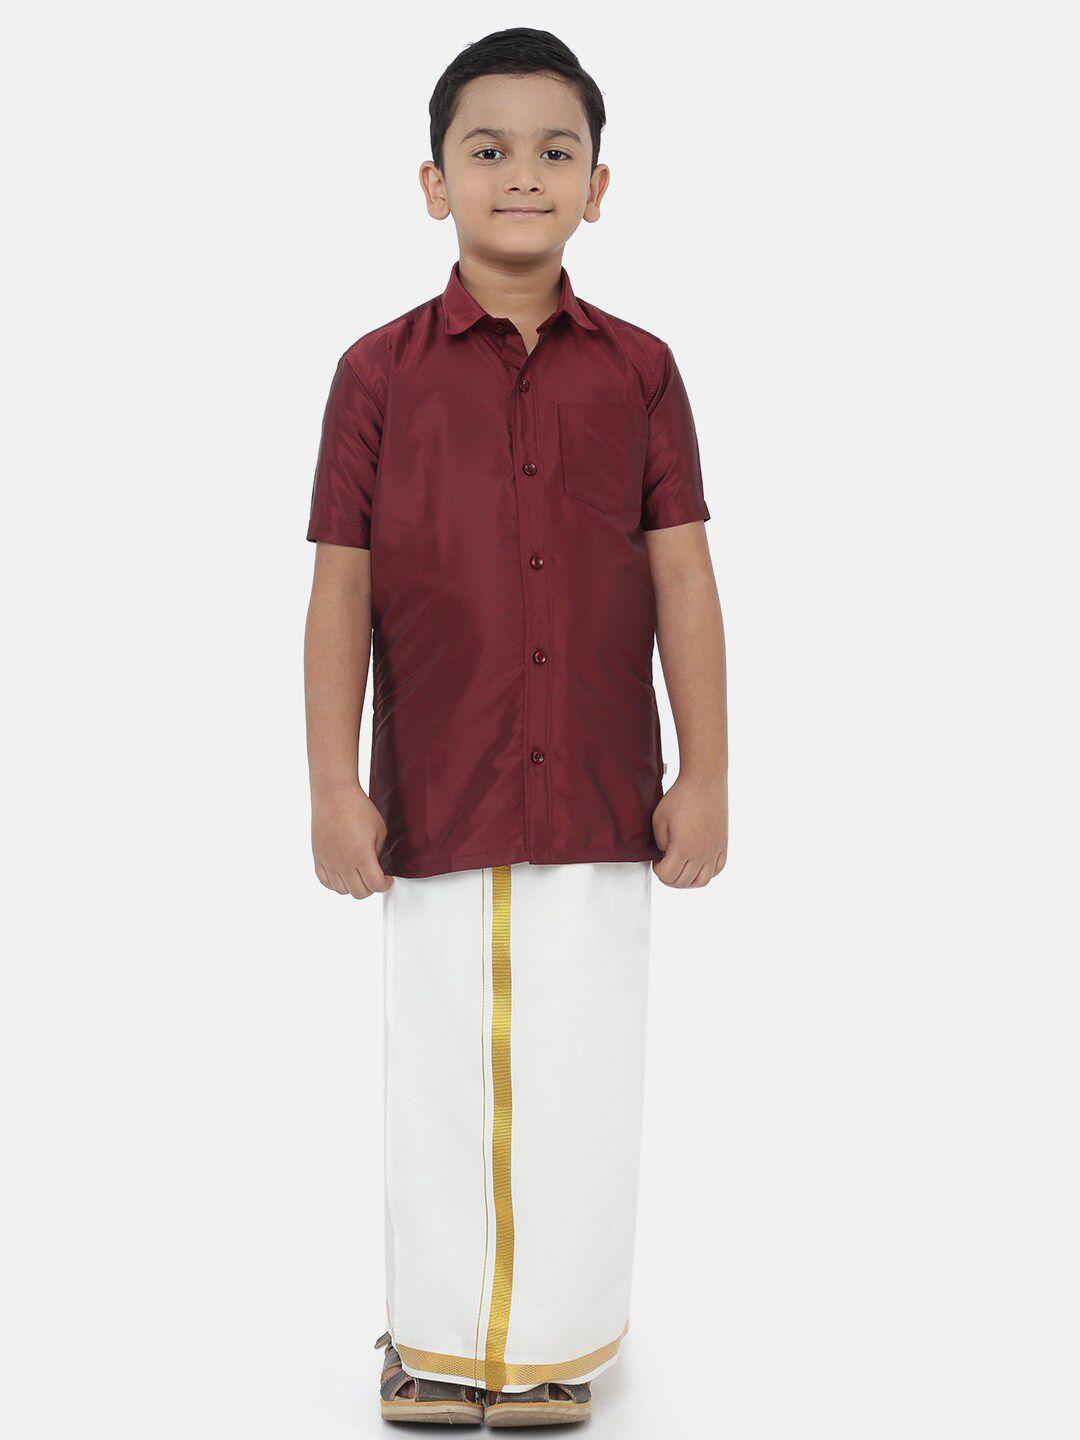 littlestars boys maroon & white shirt with dhotis